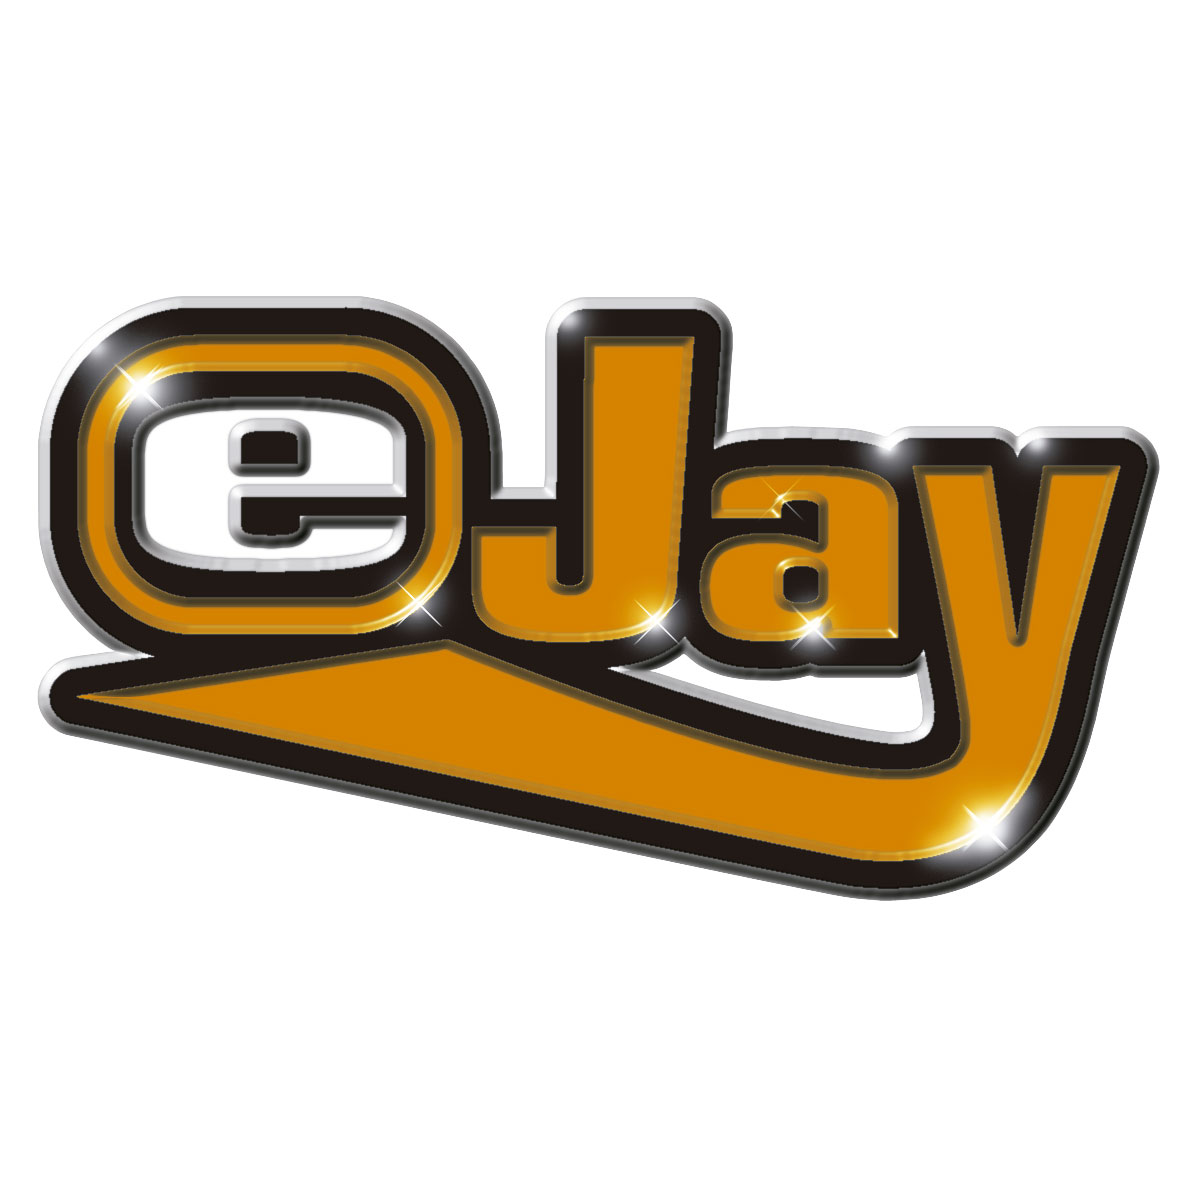 www.ejayshop.com